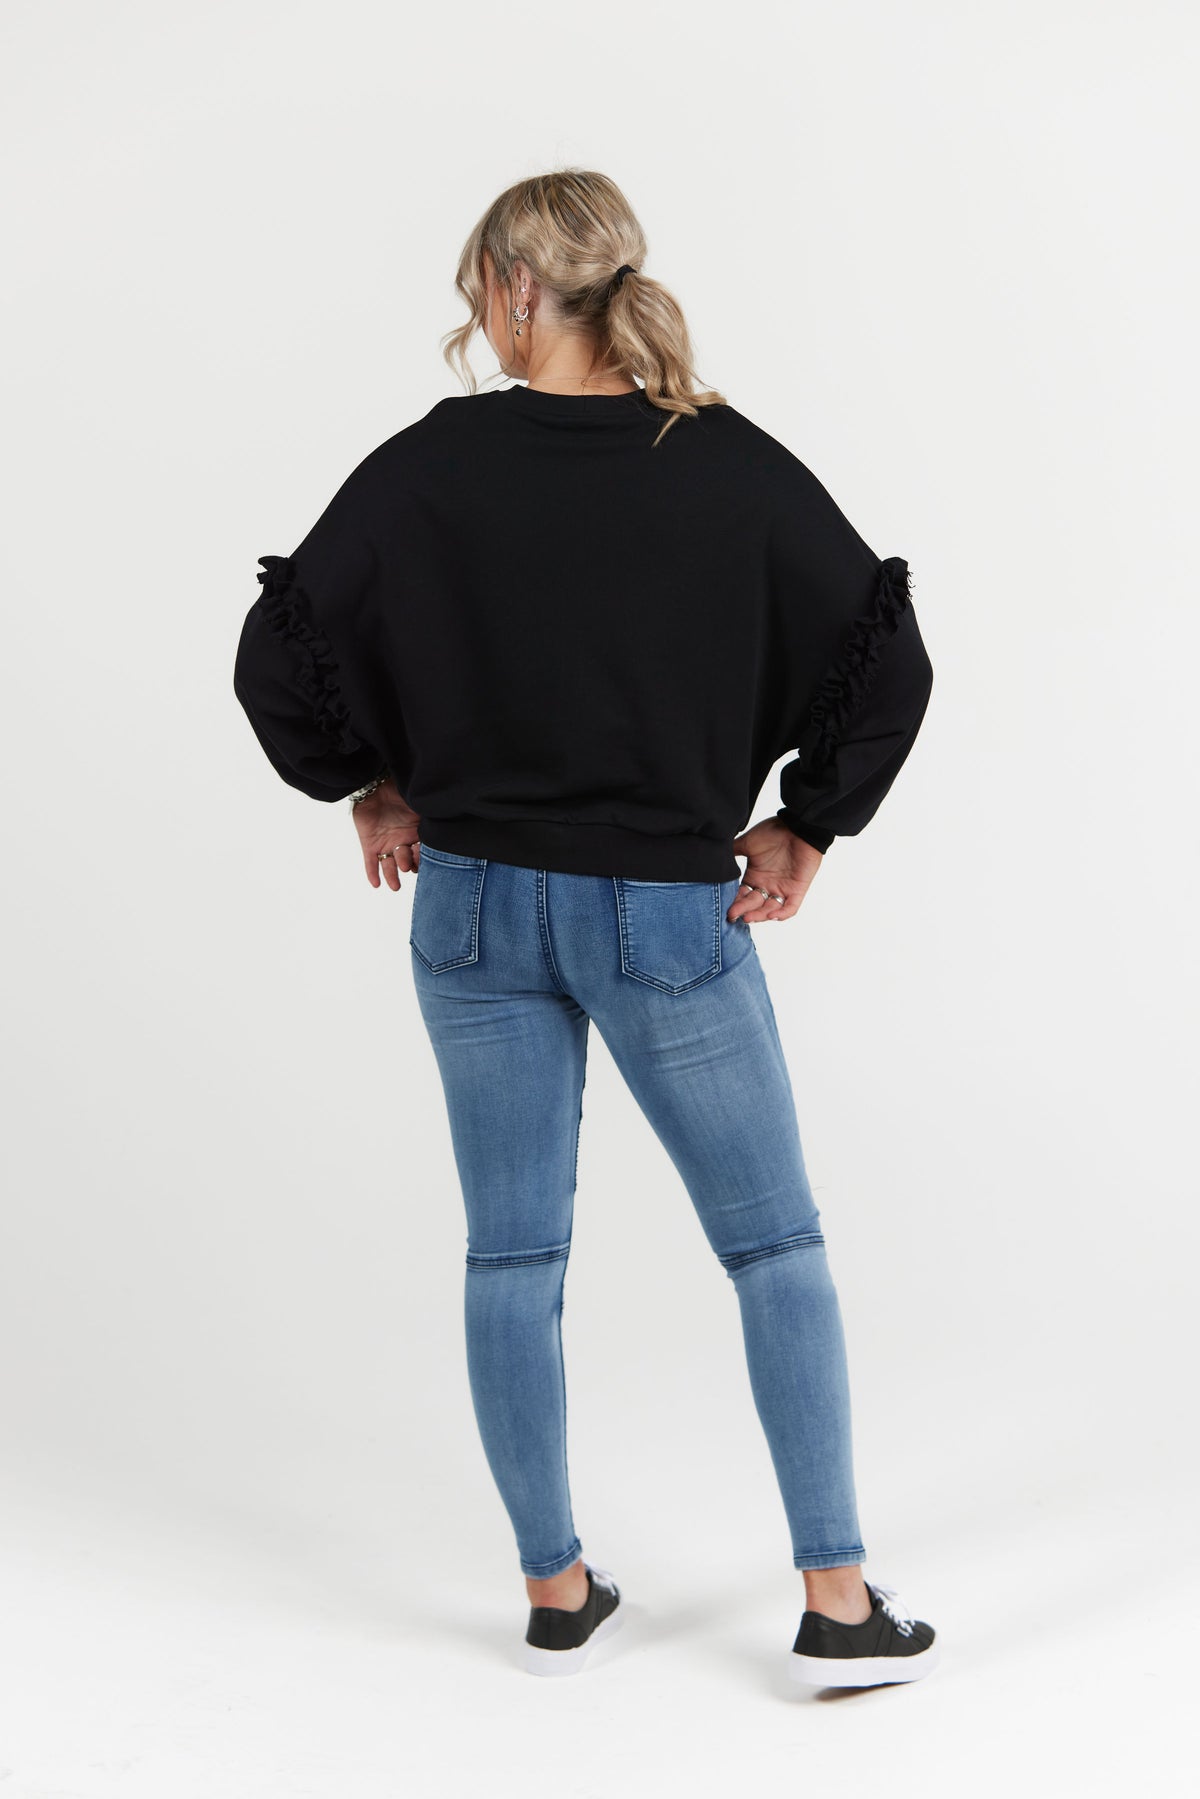 Eloise Ruffle Sweater Black